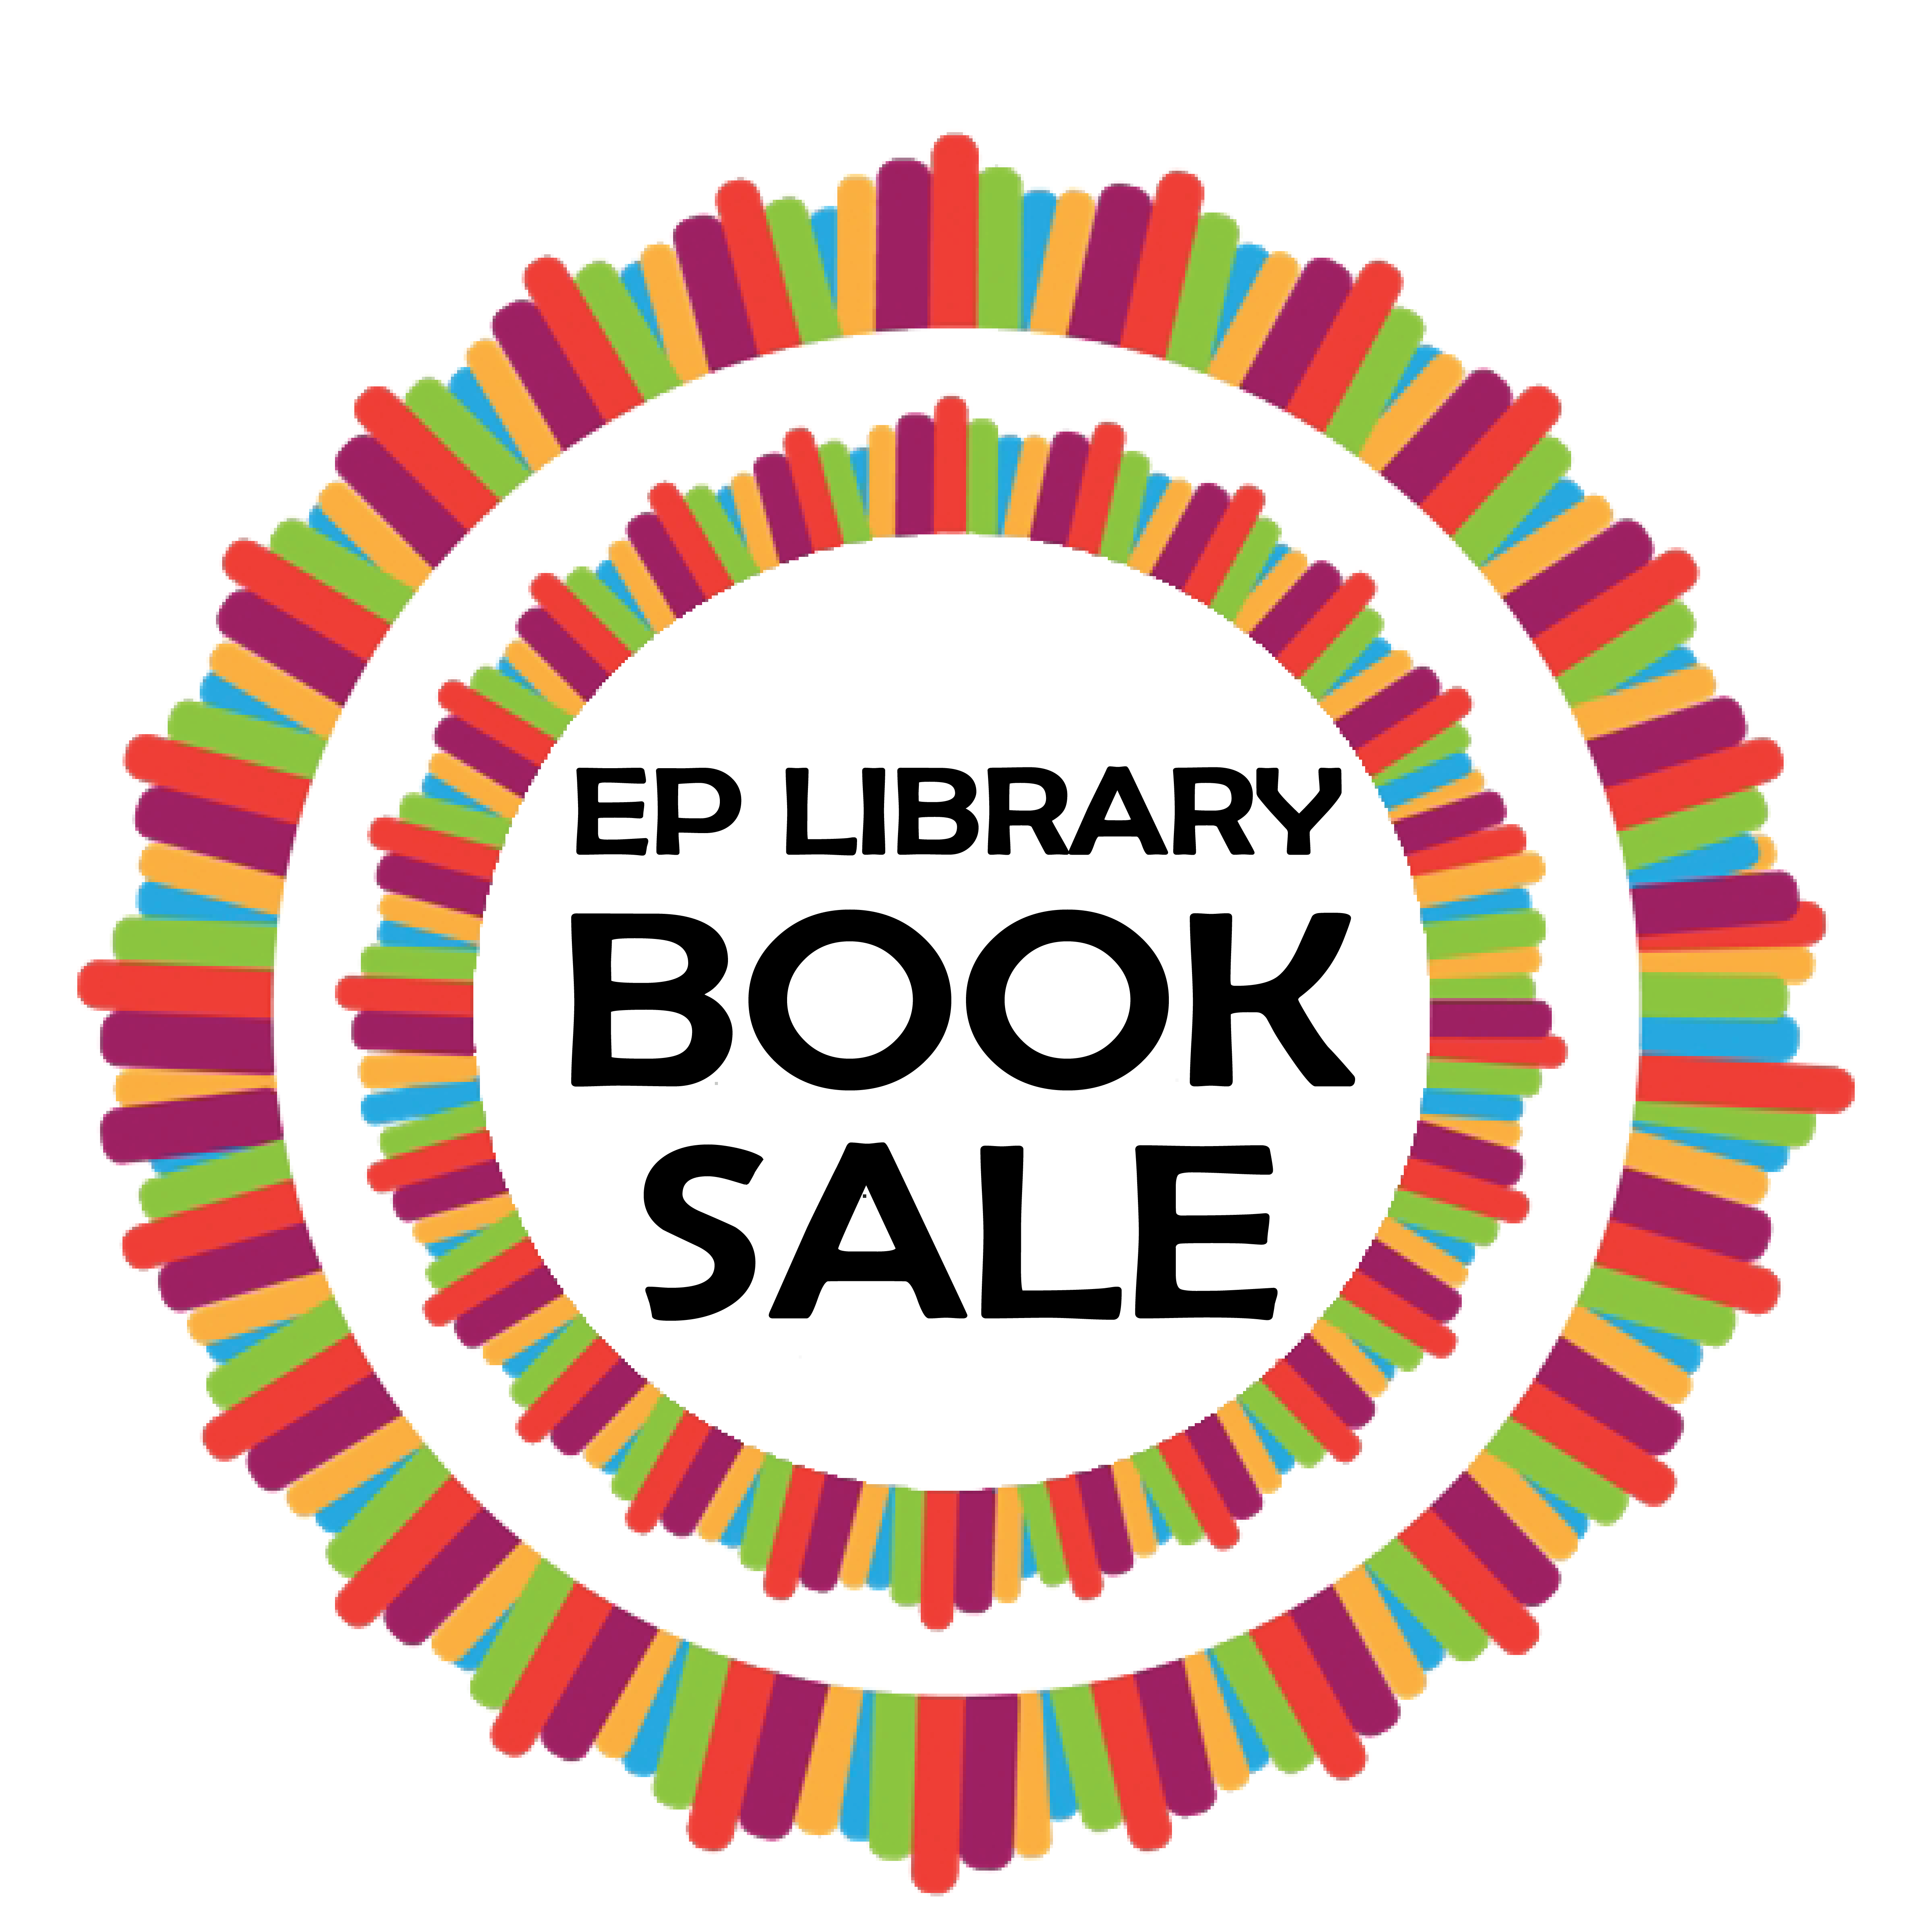 Book Sale logo